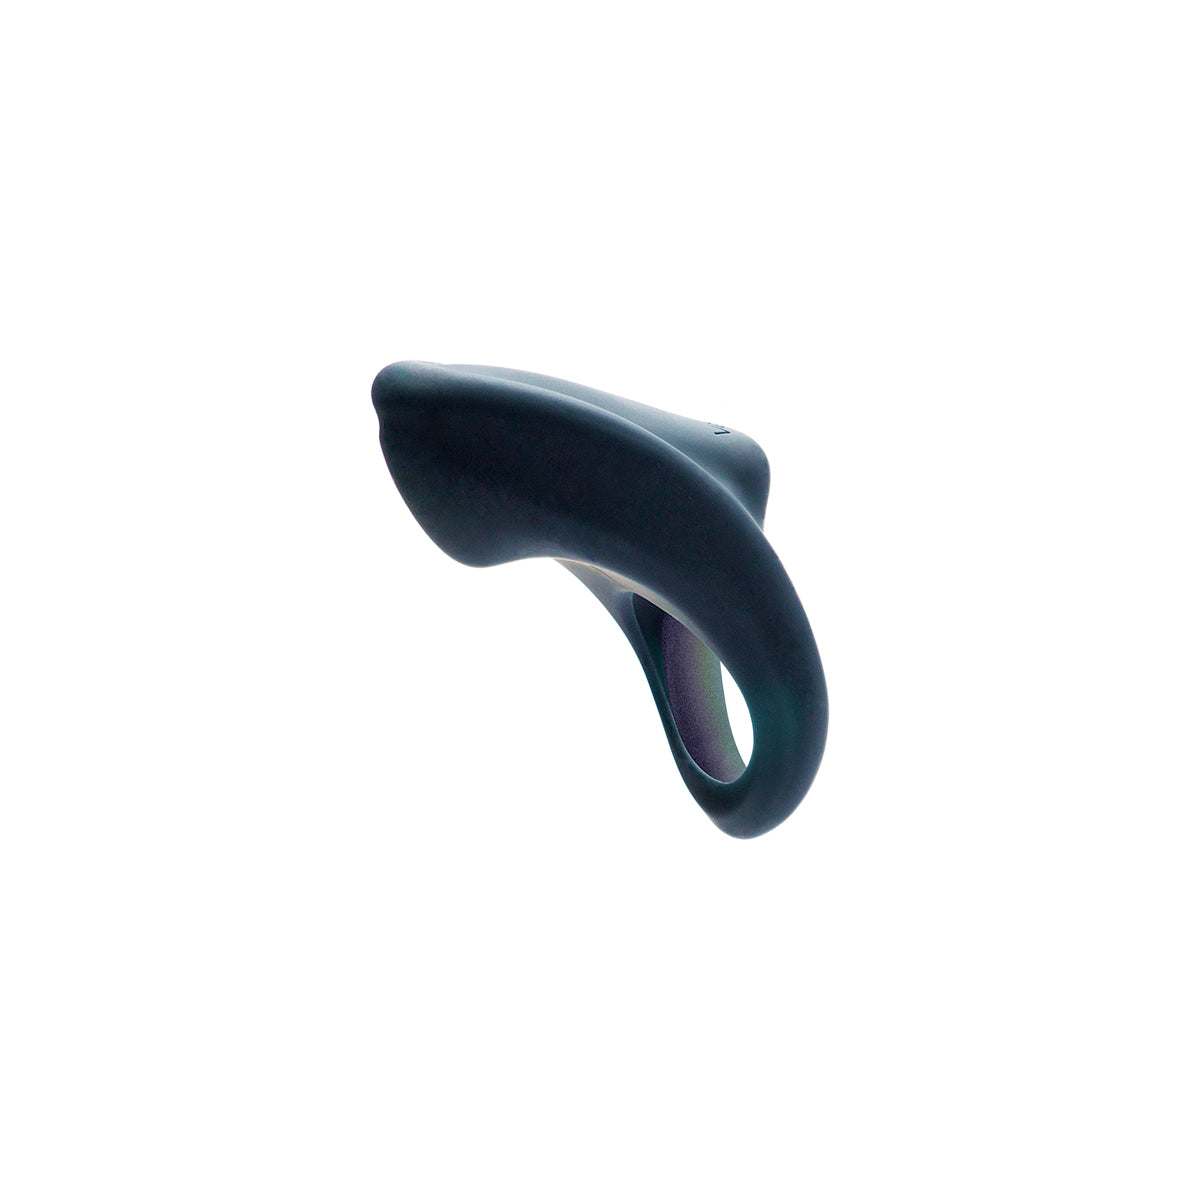 VeDO Overdrive+ Rechargeable Vibrating Ring - Just Black - Zateo Joy